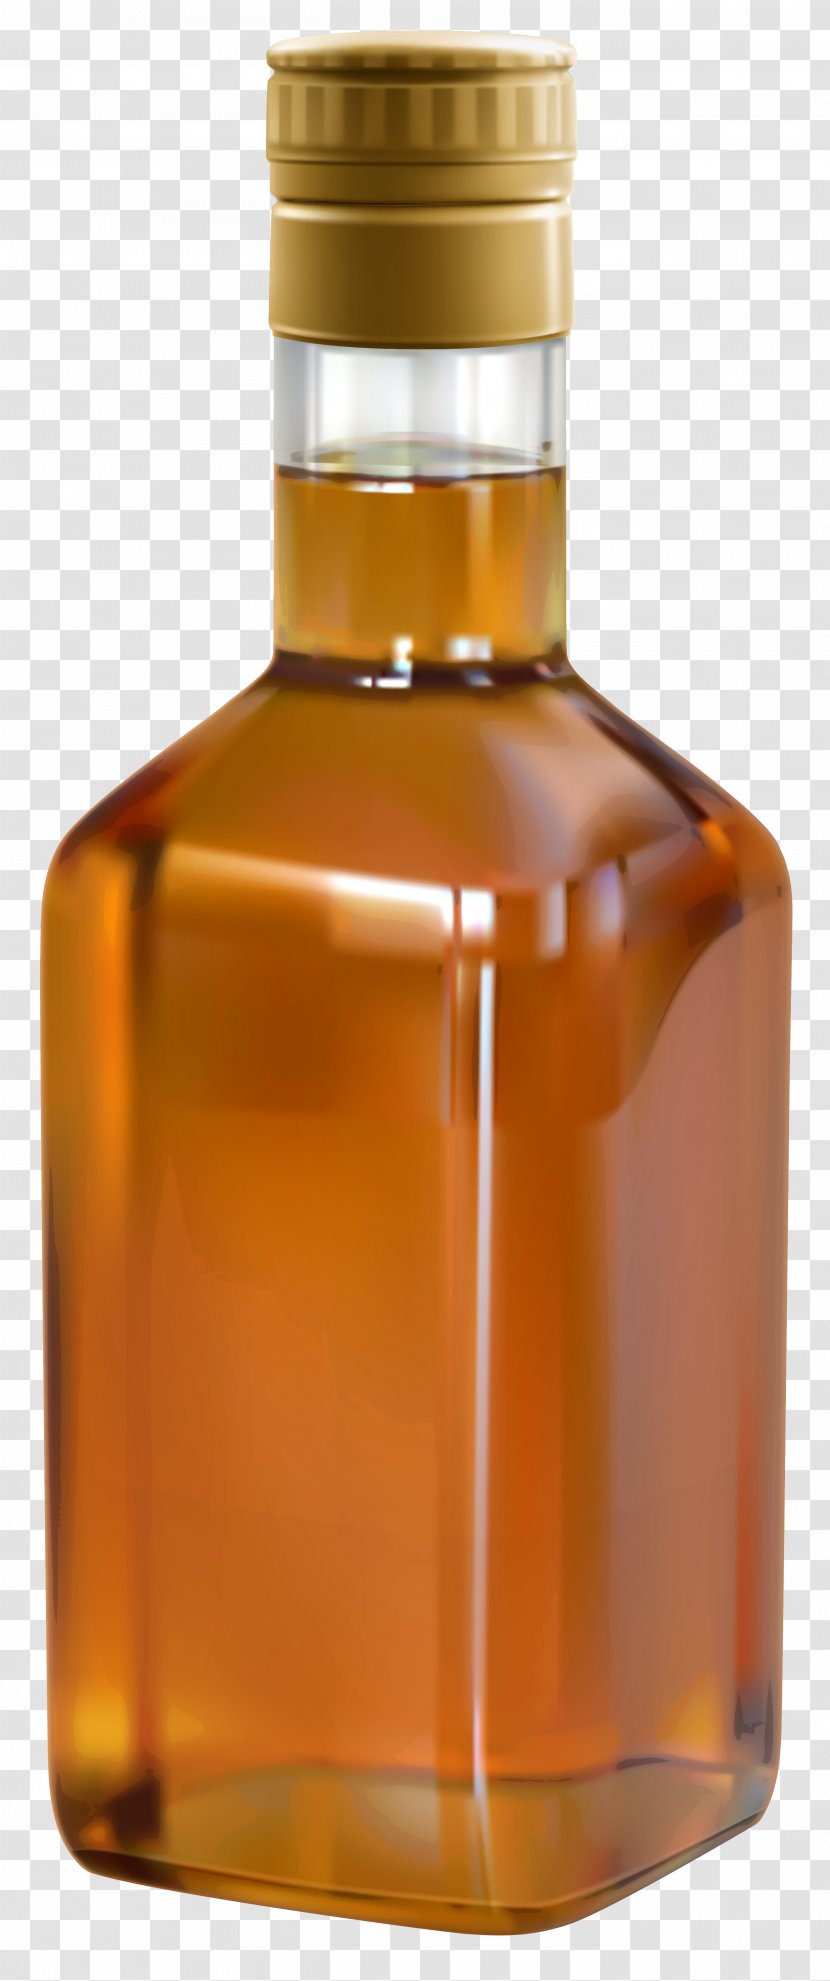 Scotch Whisky Distilled Beverage Irish Whiskey Rum - Alcoholic Drink - Bottle Clip Art Image Transparent PNG